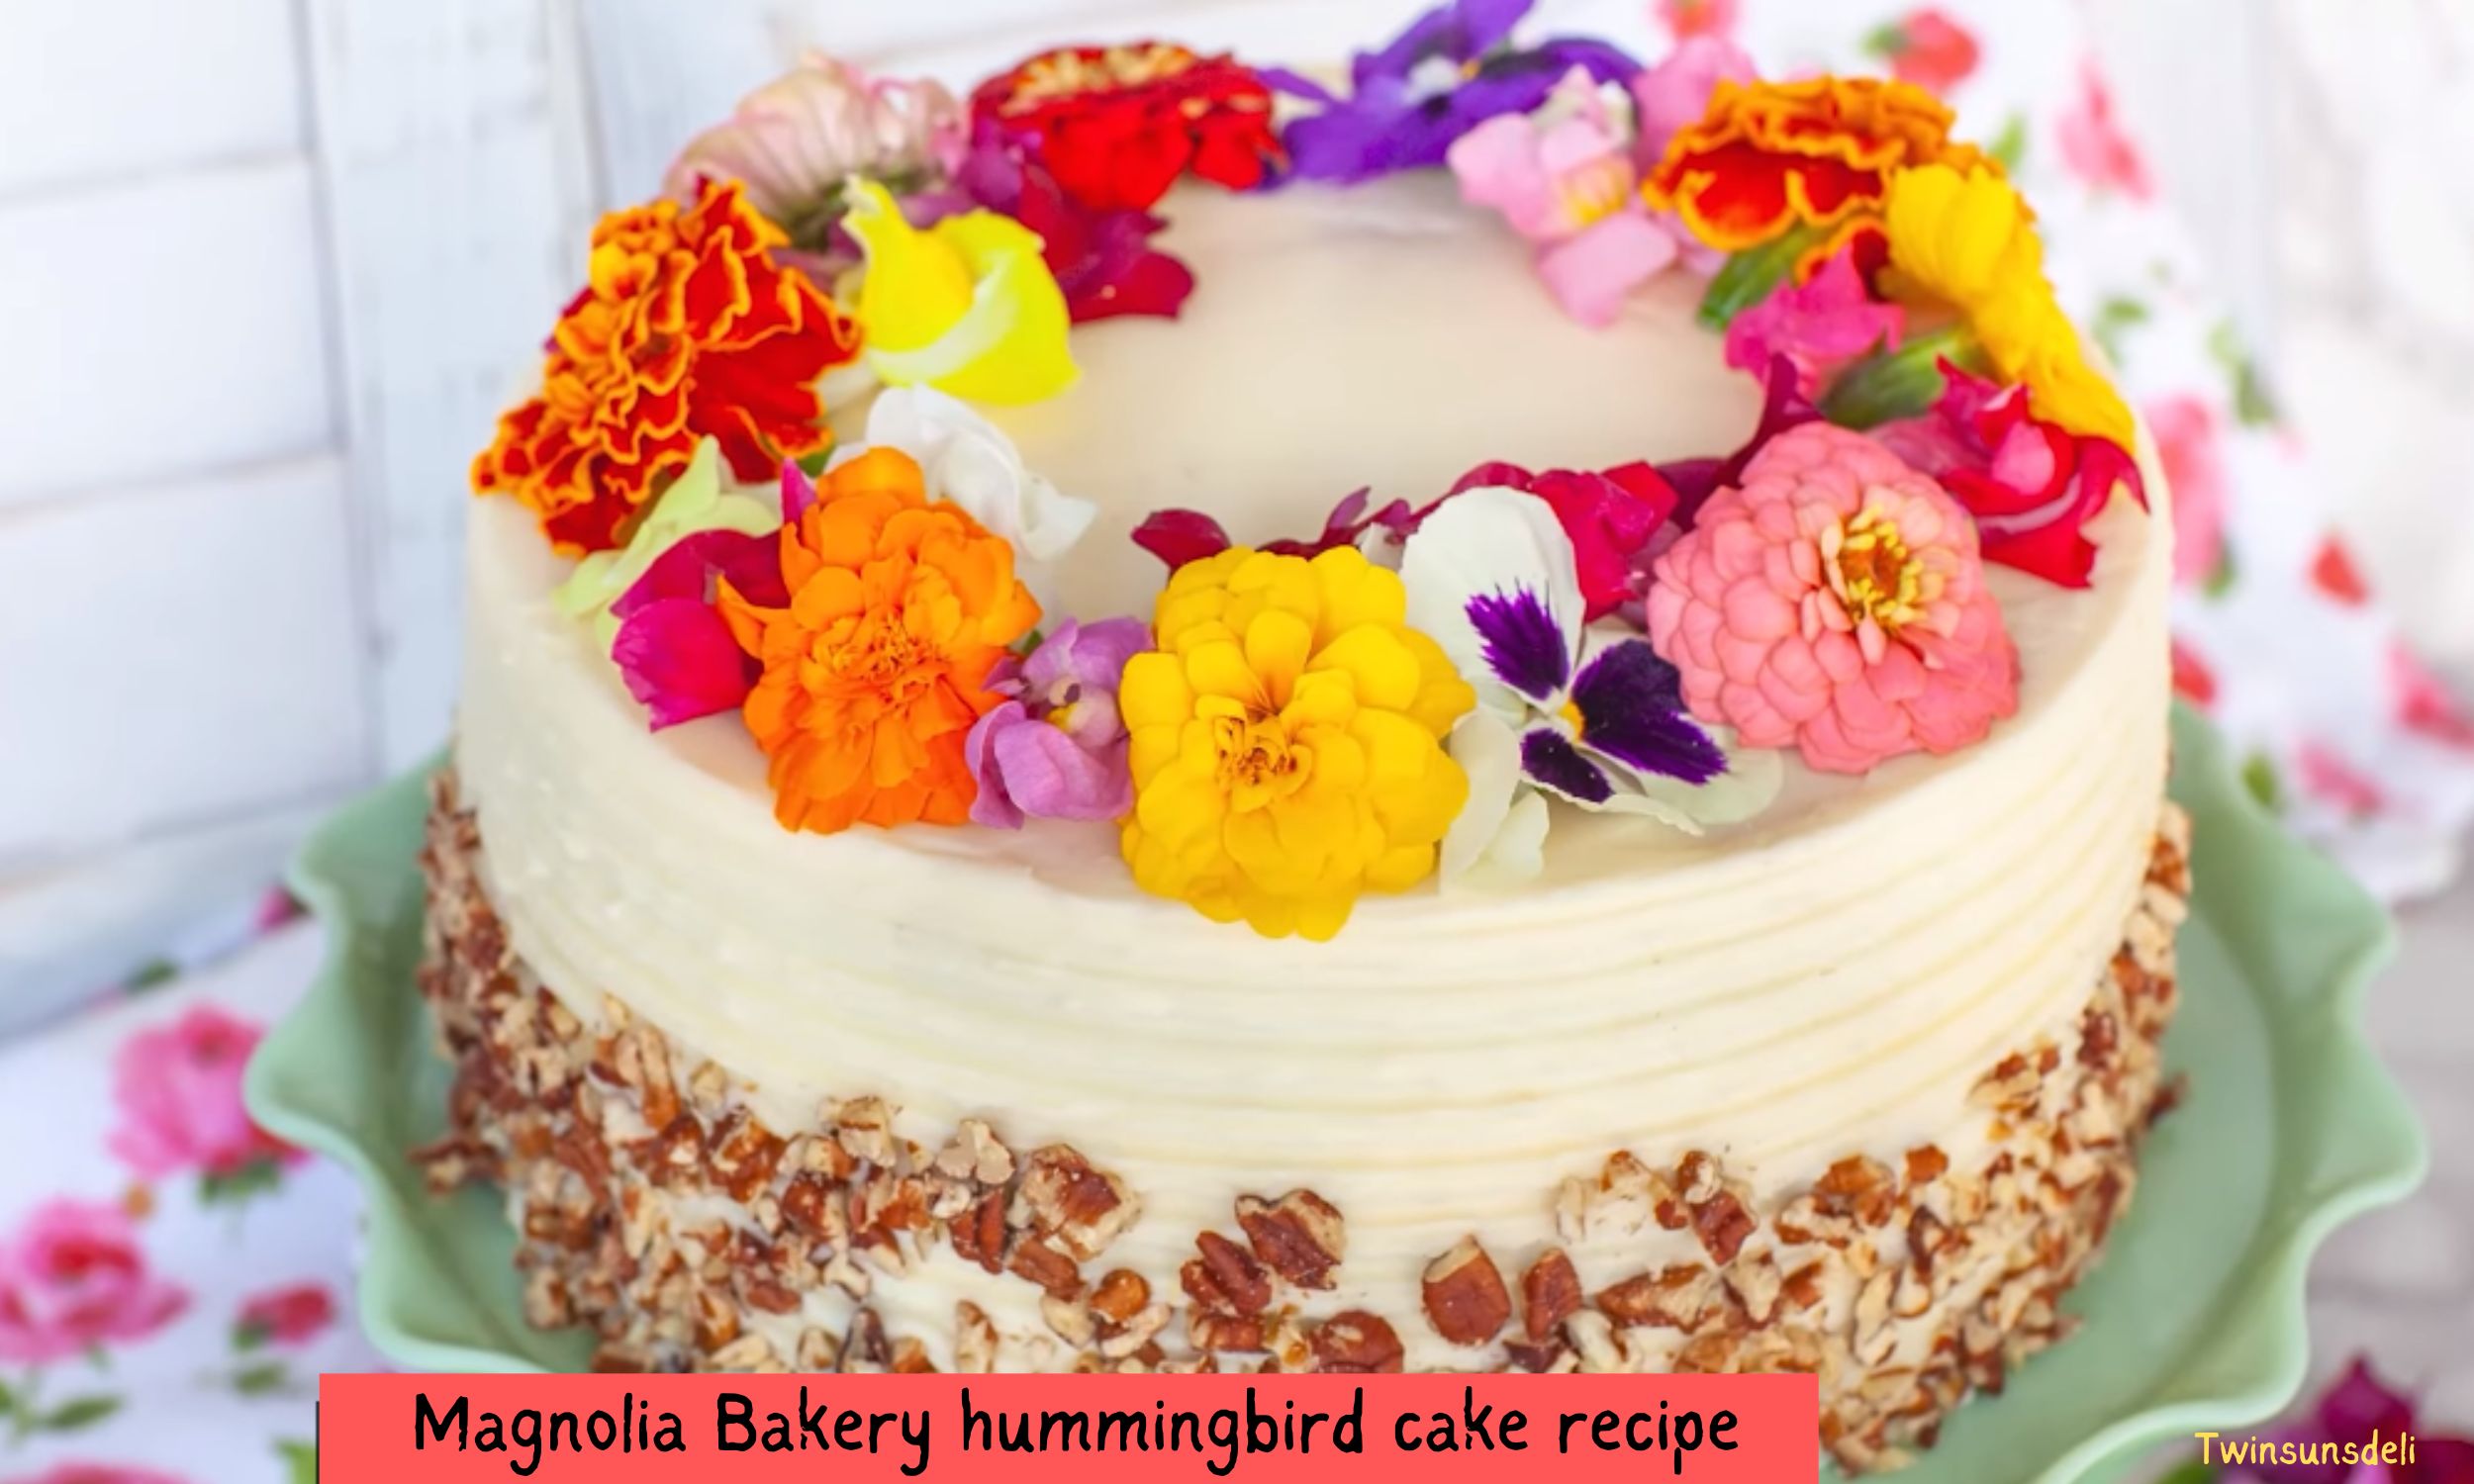 Magnolia Bakery hummingbird cake recipe